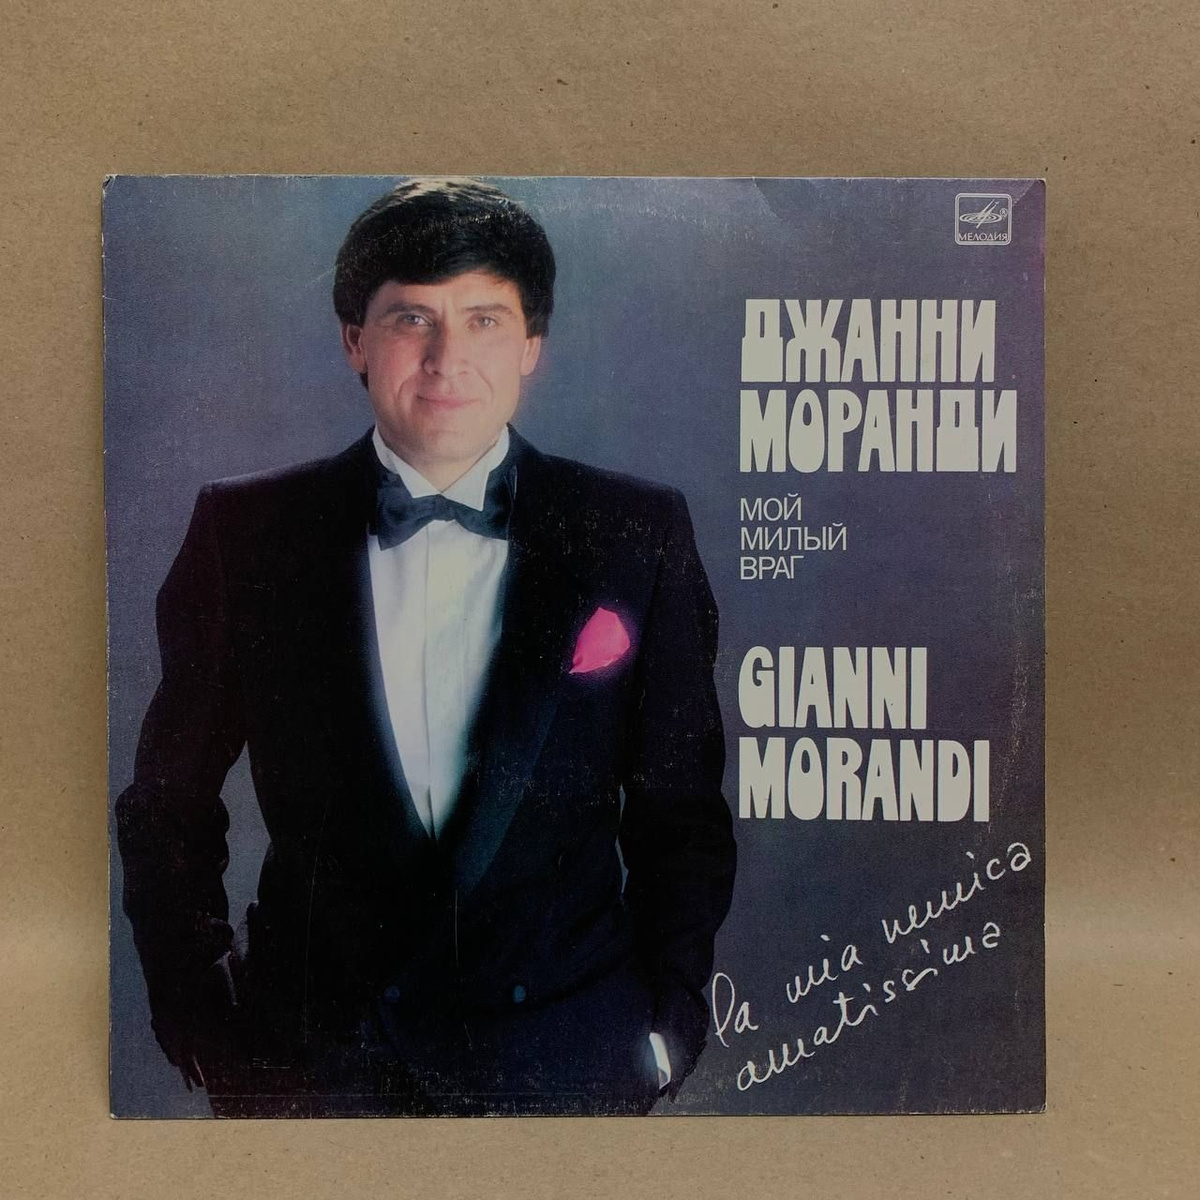 Пластинка виниловая "Джанни Моранди. Мой милый враг"